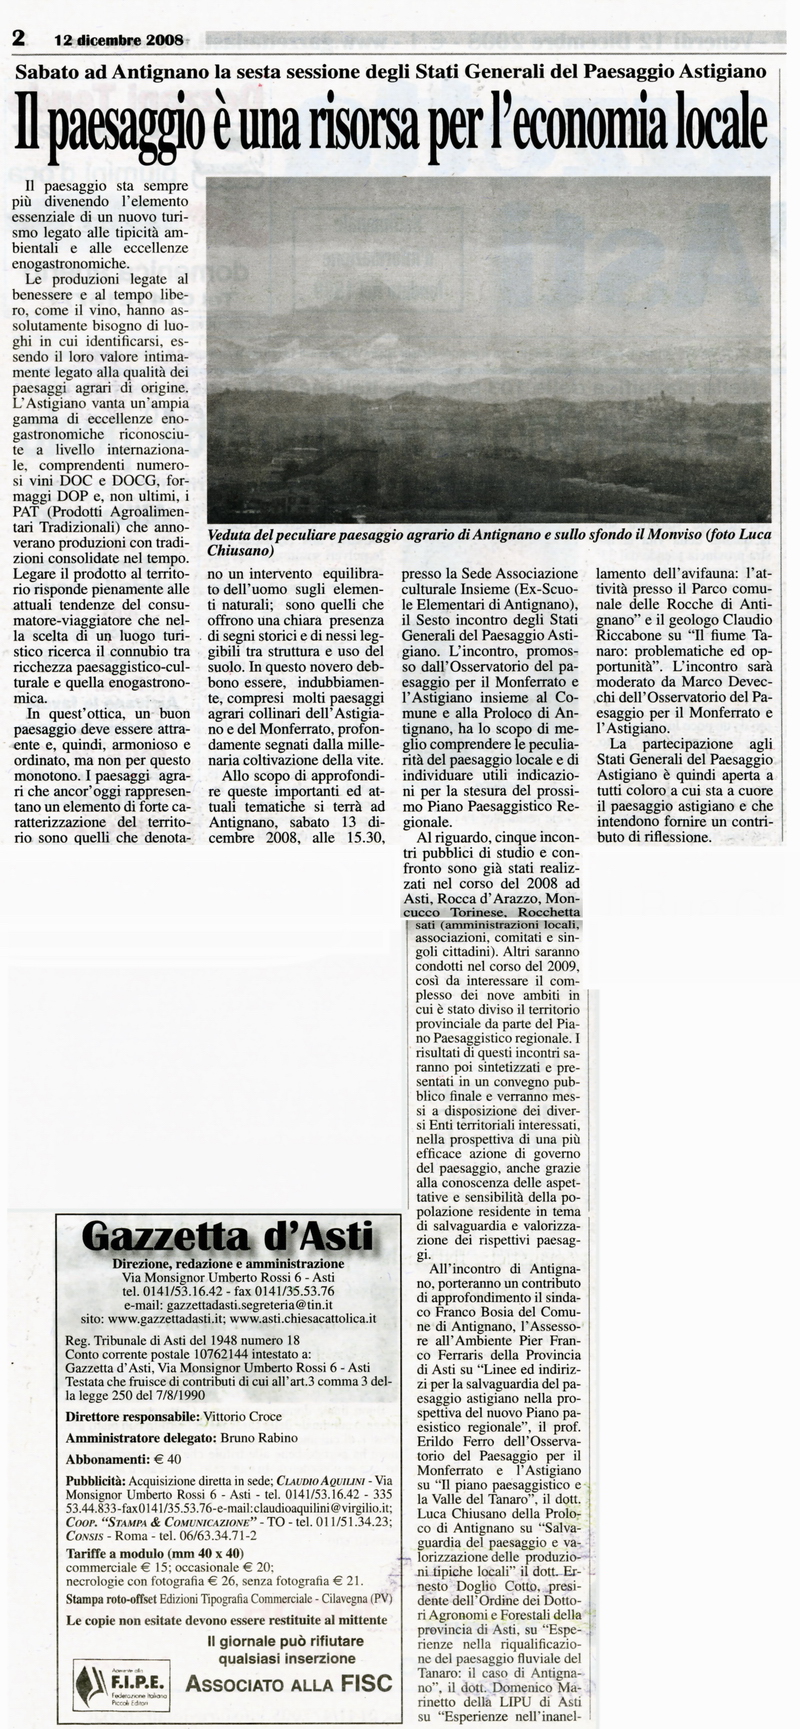 Gazzetta d'Asti - Venerdì 12 dicembre 2008